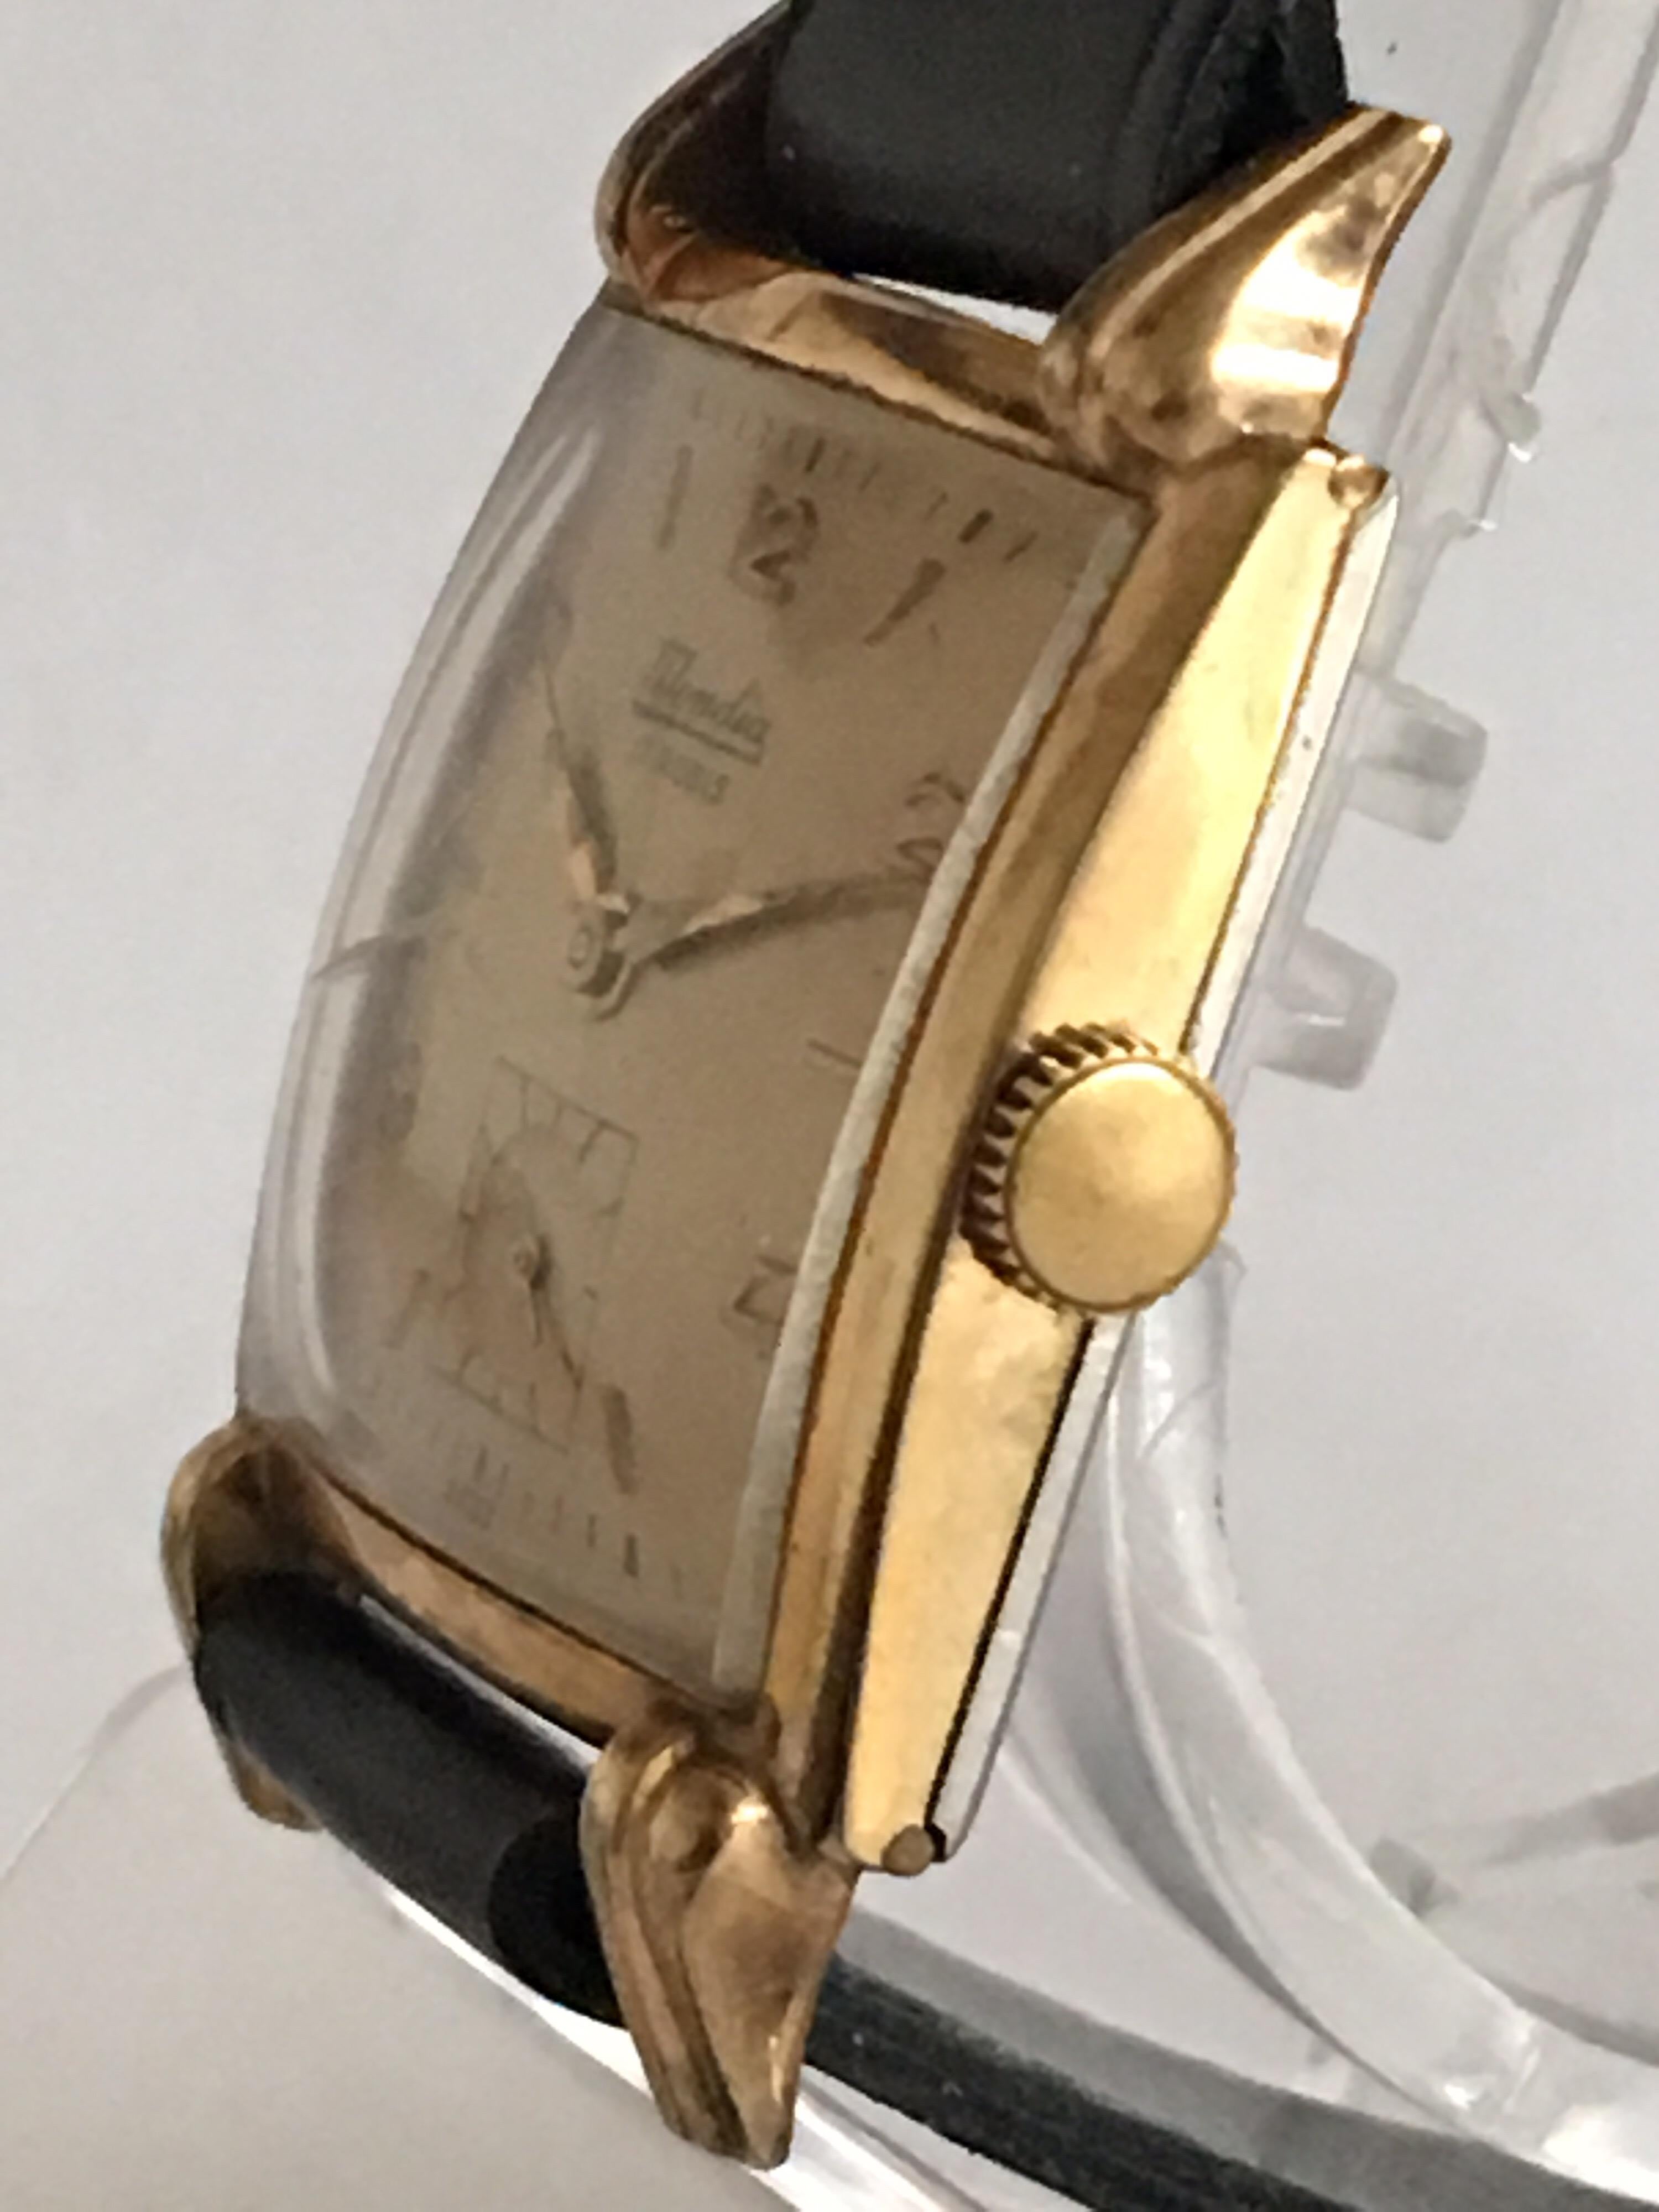 caravelle watch vintage